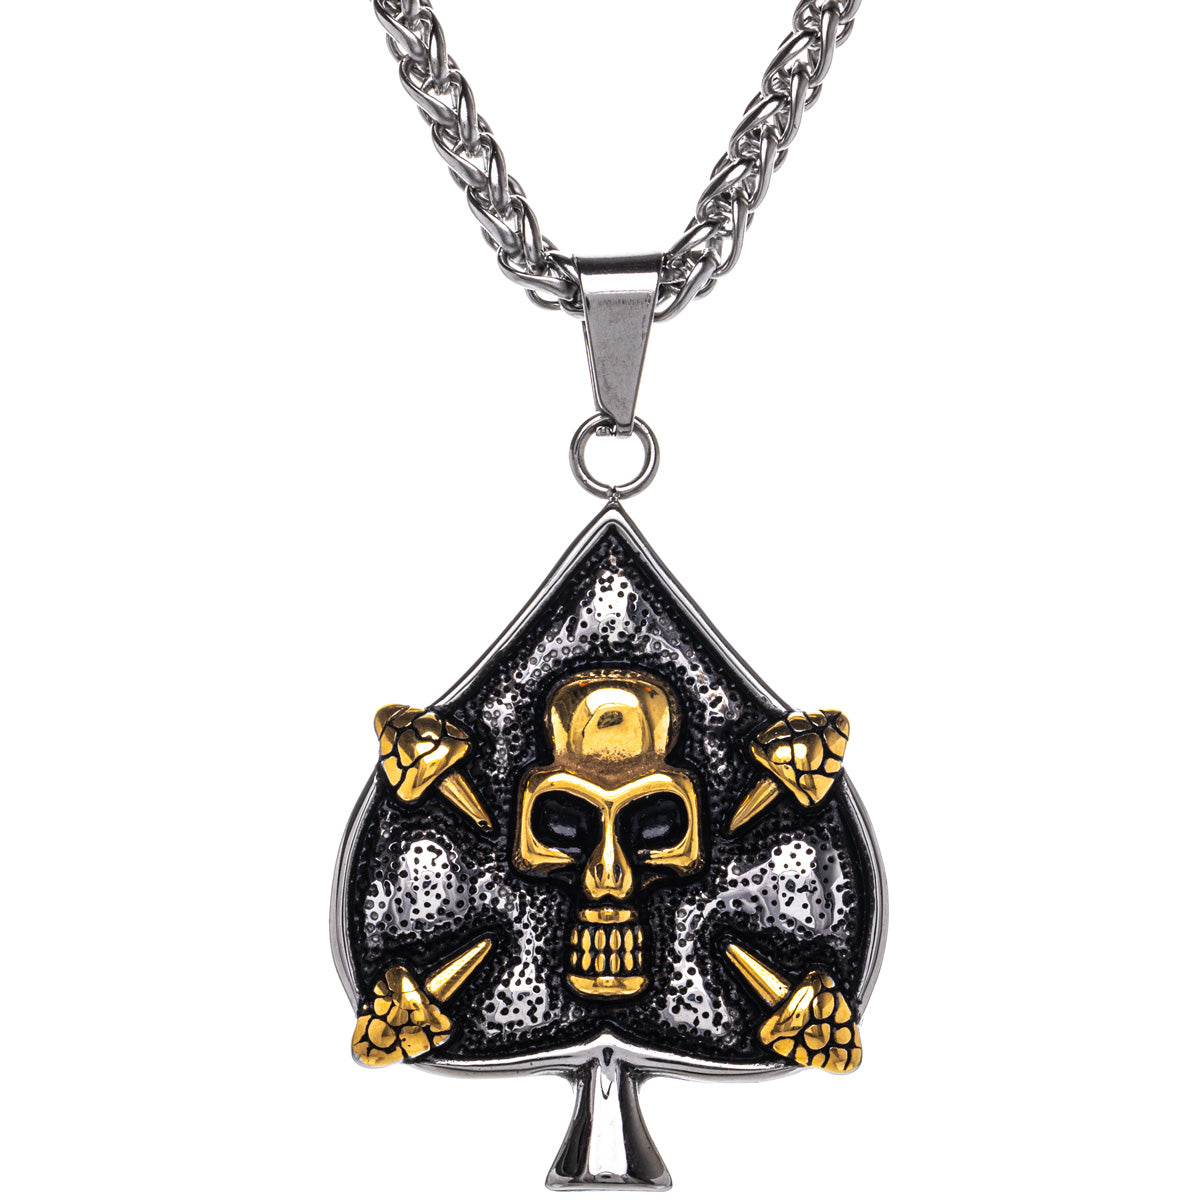 Ace of spades skull pendant necklace (Steel 316L)